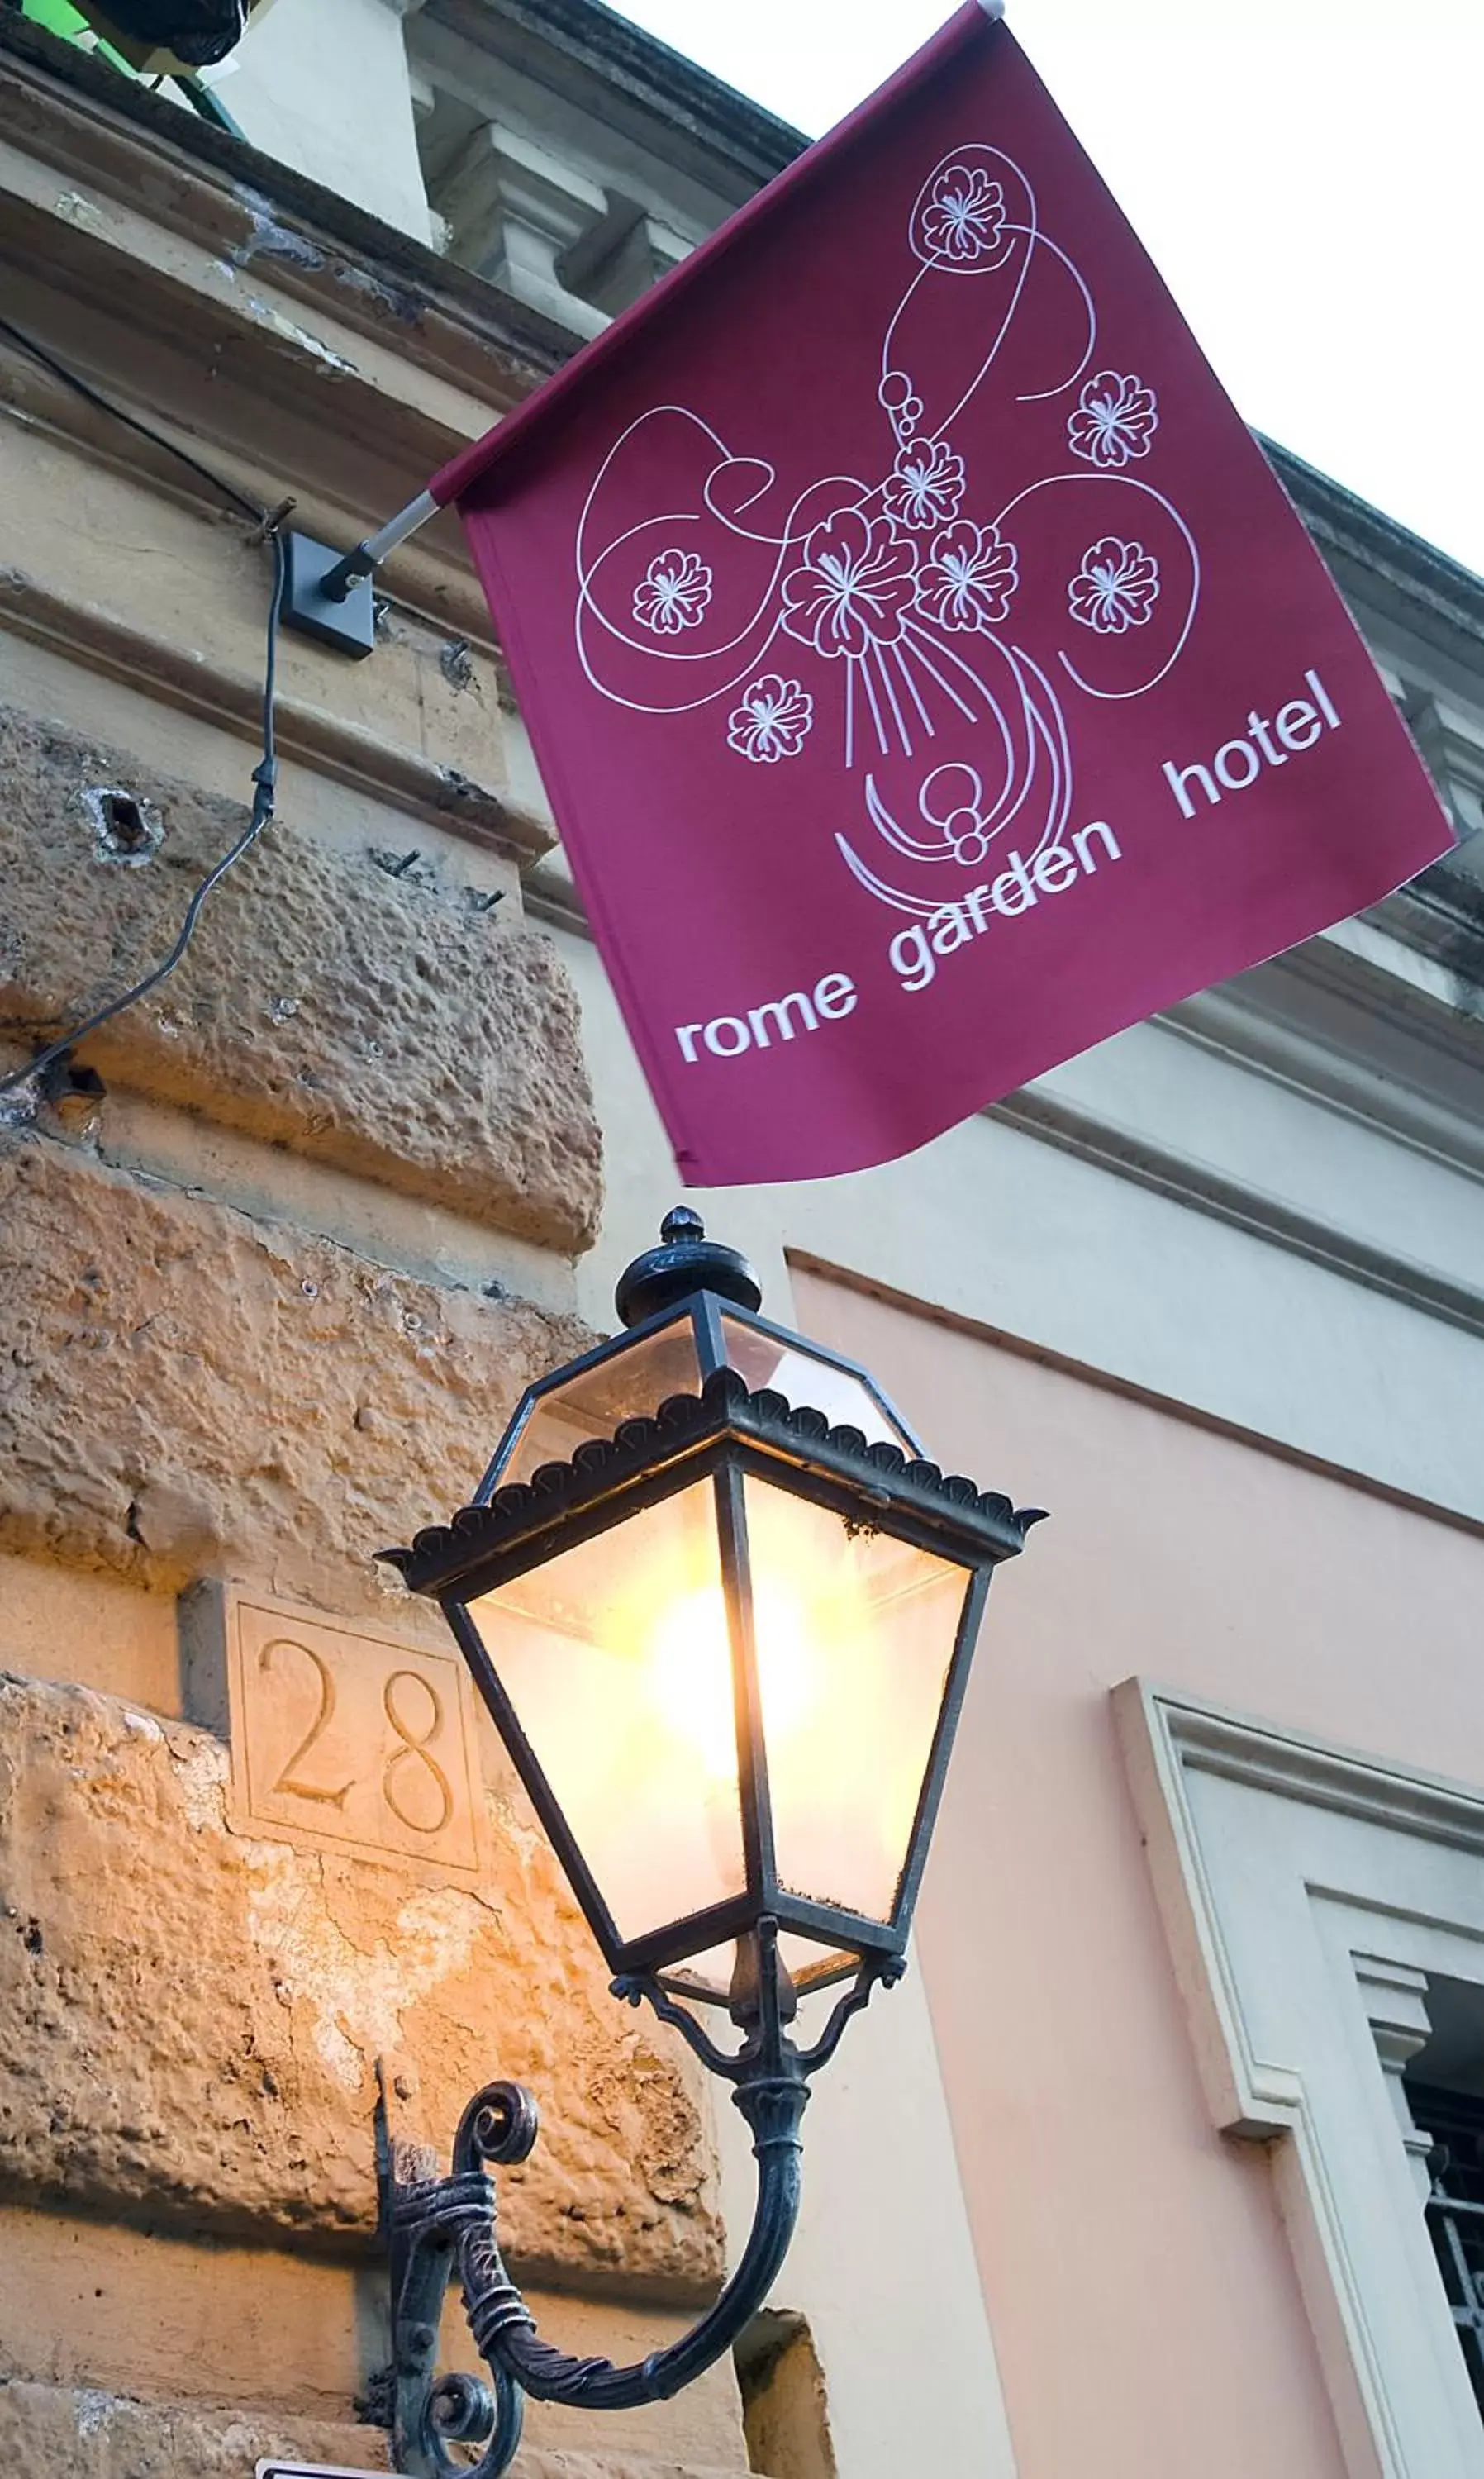 Logo/Certificate/Sign in Rome Garden Hotel